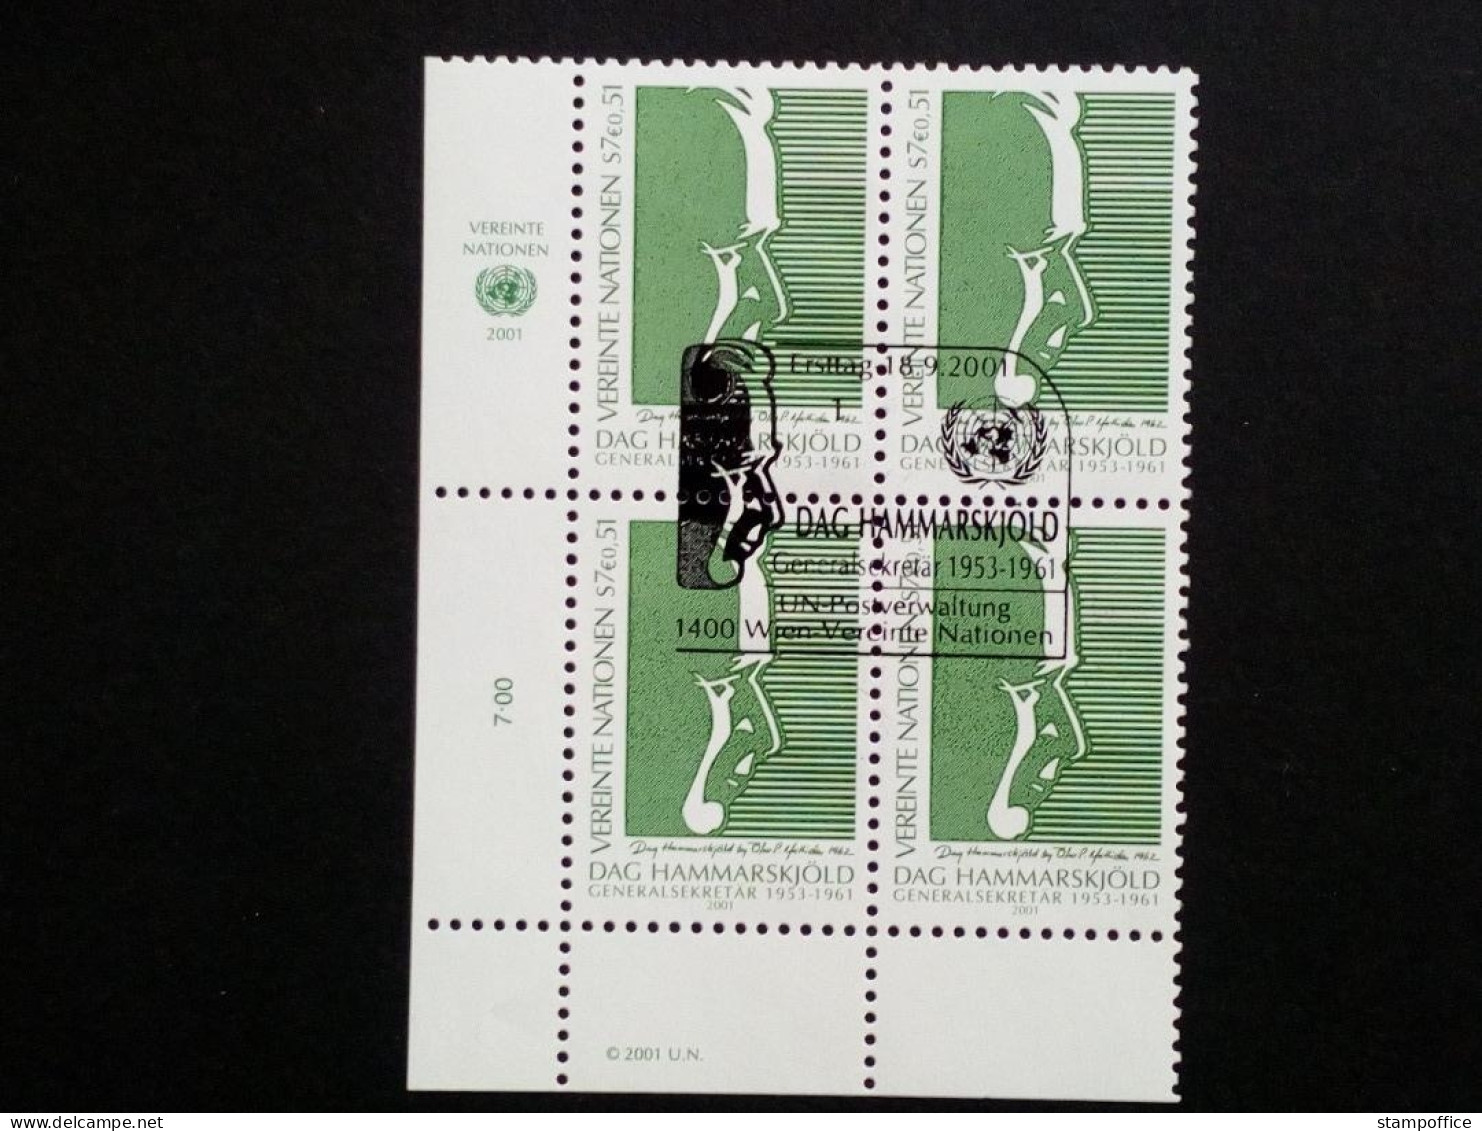 UNO-WIEN MI-NR. 341 GESTEMPELT(USED) 4er BLOCK 40. TODESTAG VON DAG HAMMARSKJÖLD 2001 - Used Stamps